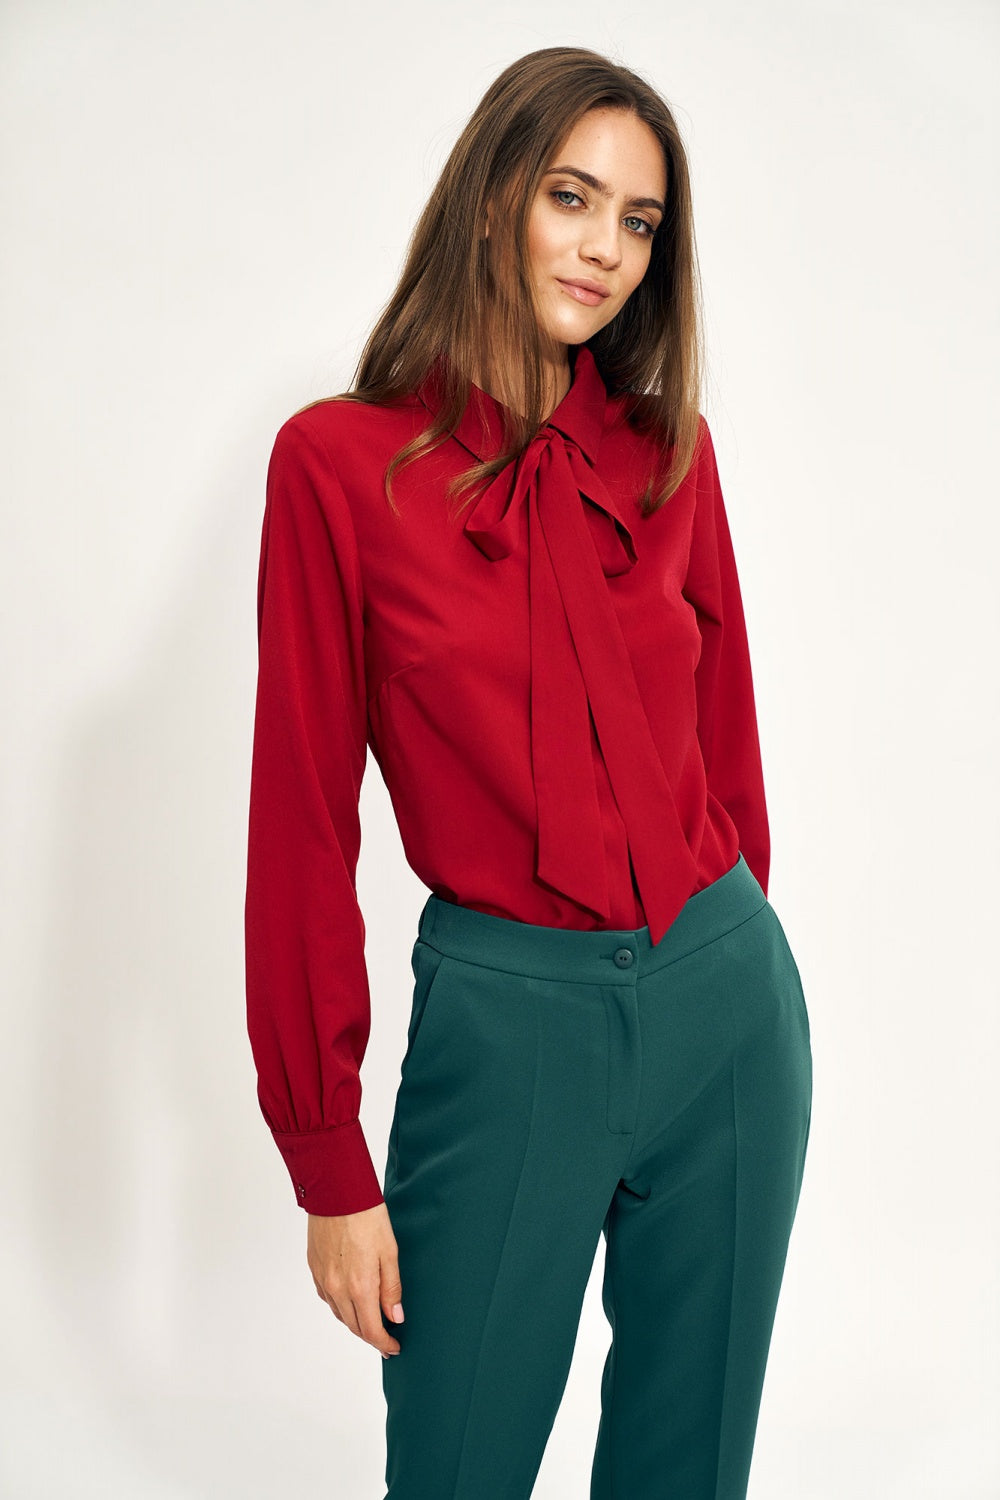 Women's Long sleeve shirt model 170482 - Ladies Casual Spring / Summer Top - Burgundy Color